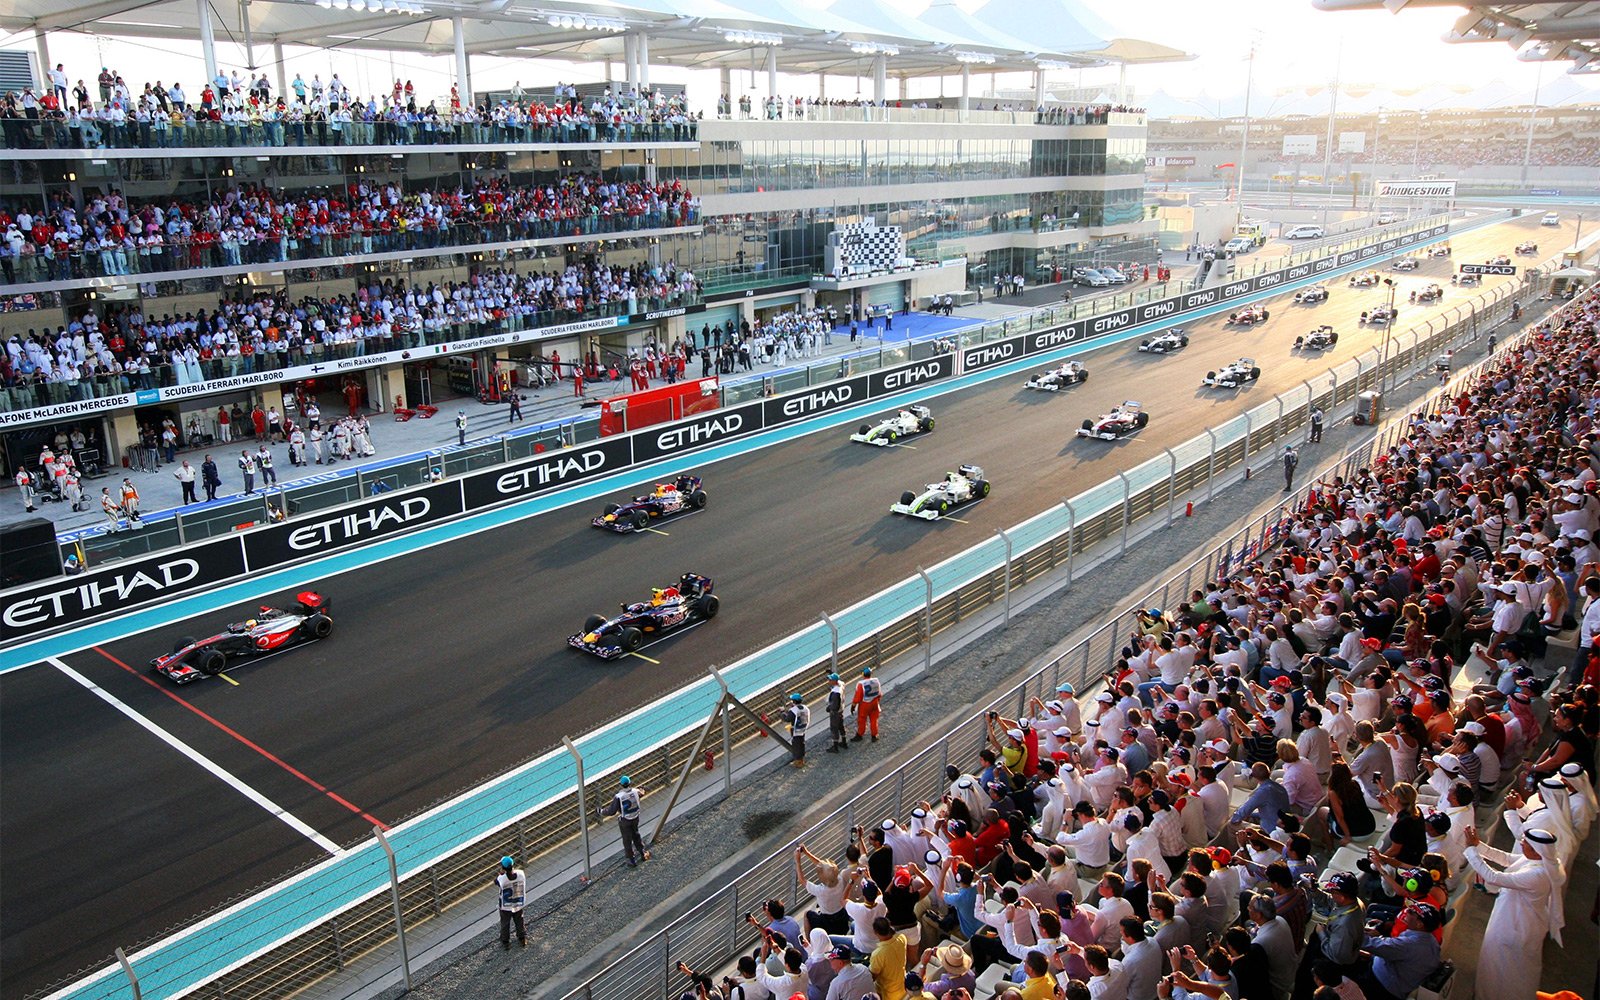 How to go to Formula One Grand Prix in Abu Dhabi